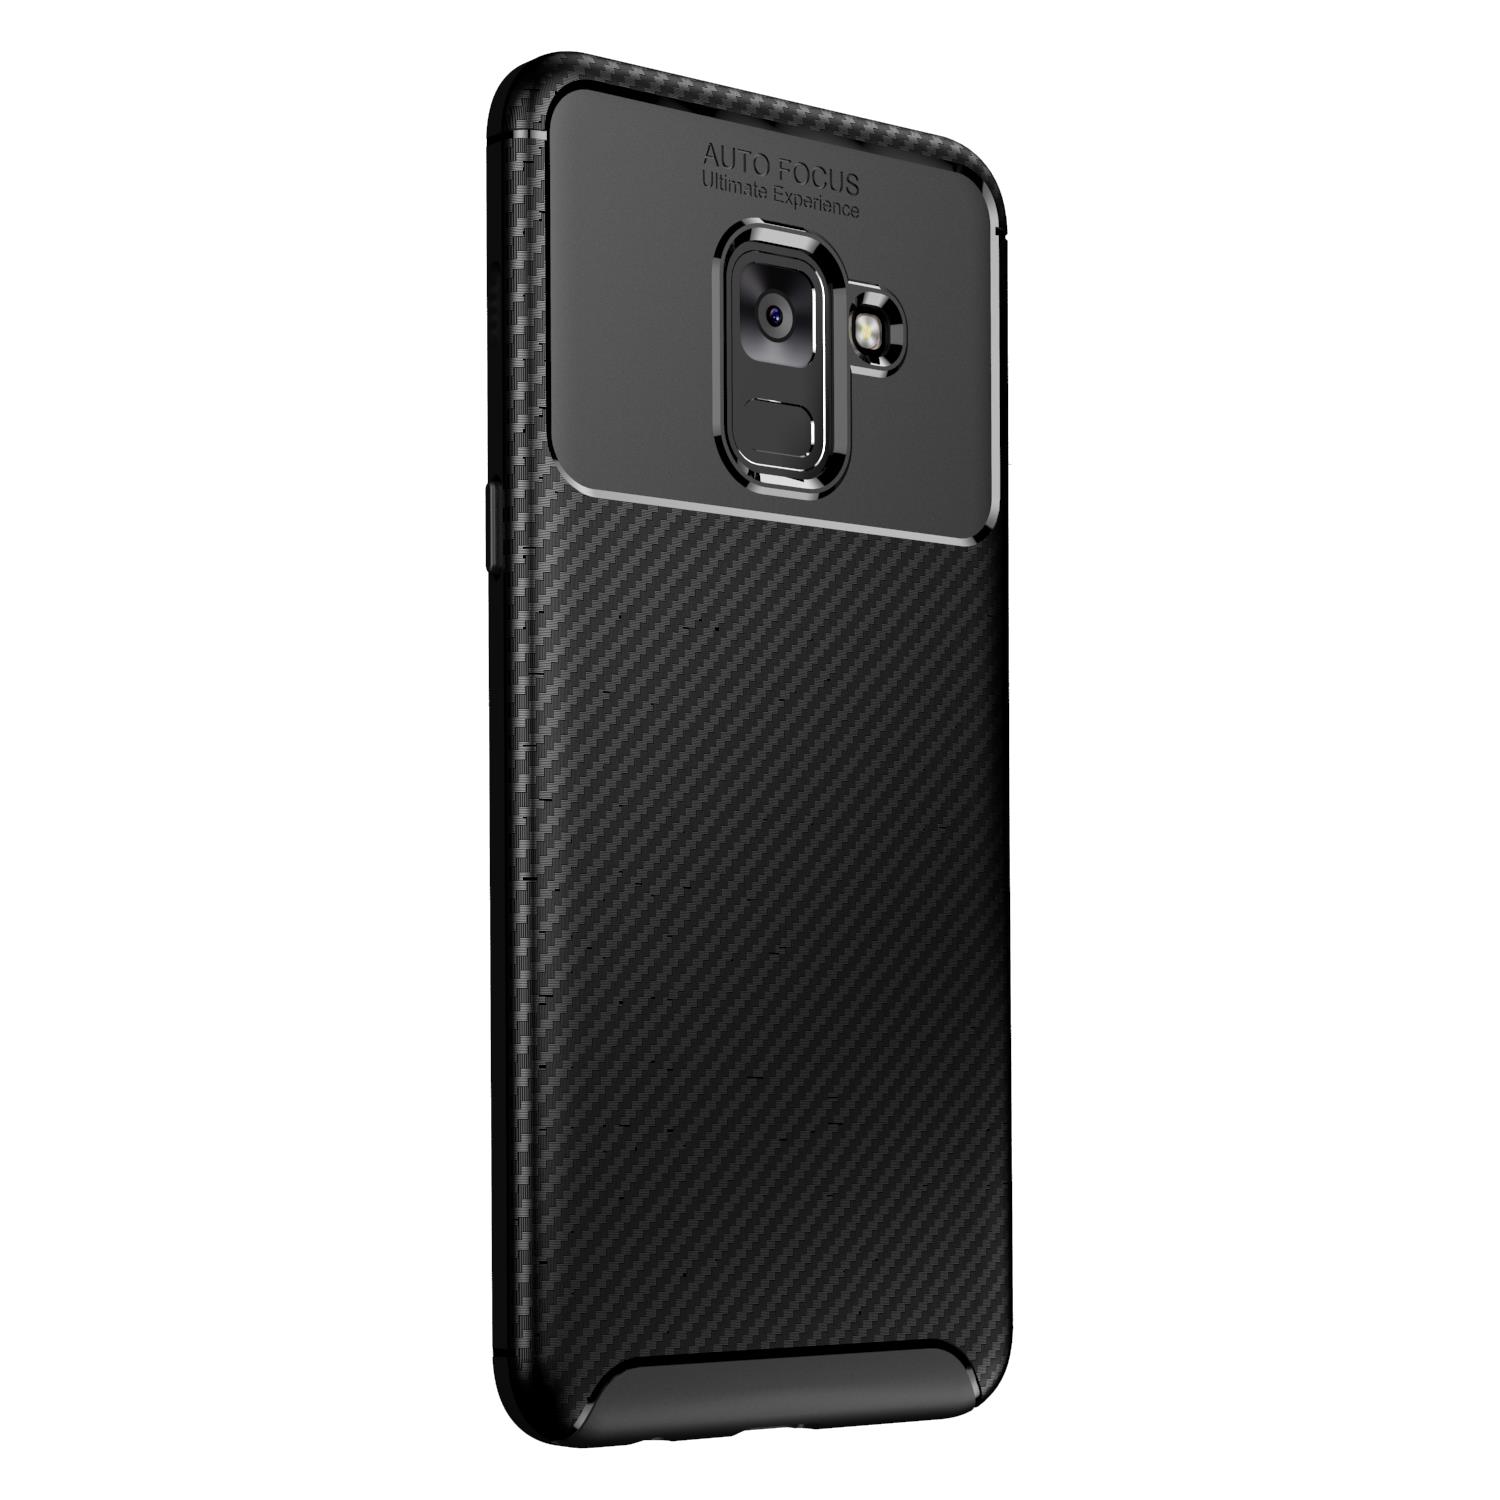 Bakeey-Protective-Case-For-iPhone-A8-2018-Slim-Carbon-Fiber-Fingerprint-Resistant-Soft-TPU-1361108-2